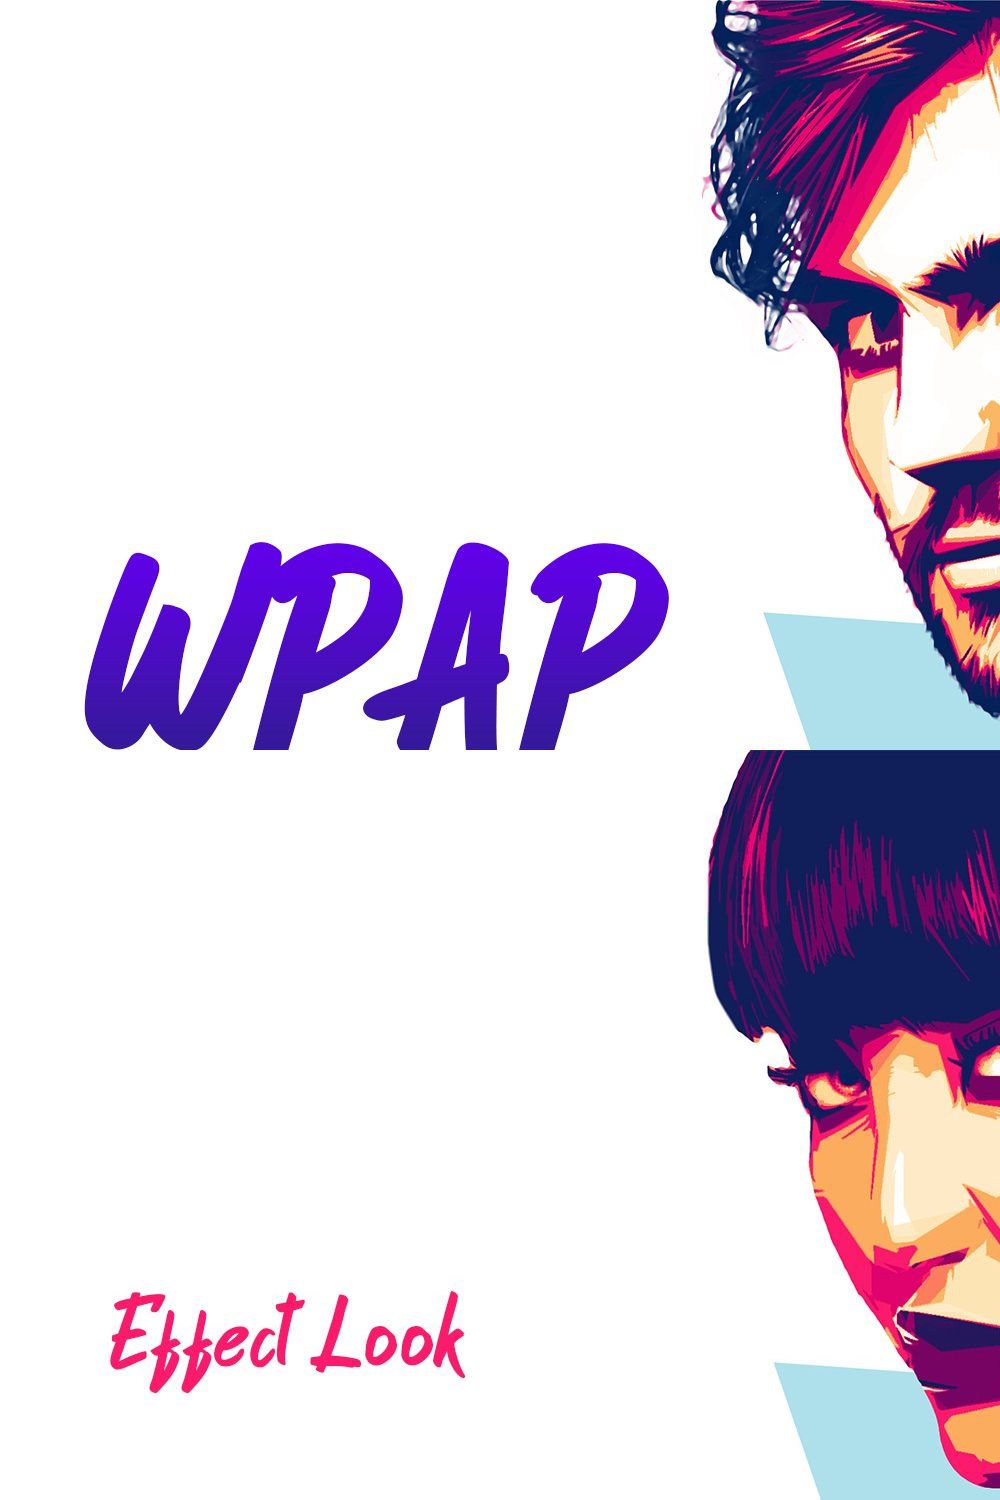 WPAP Pop Art Style Photoshop Effect pinterest preview image.